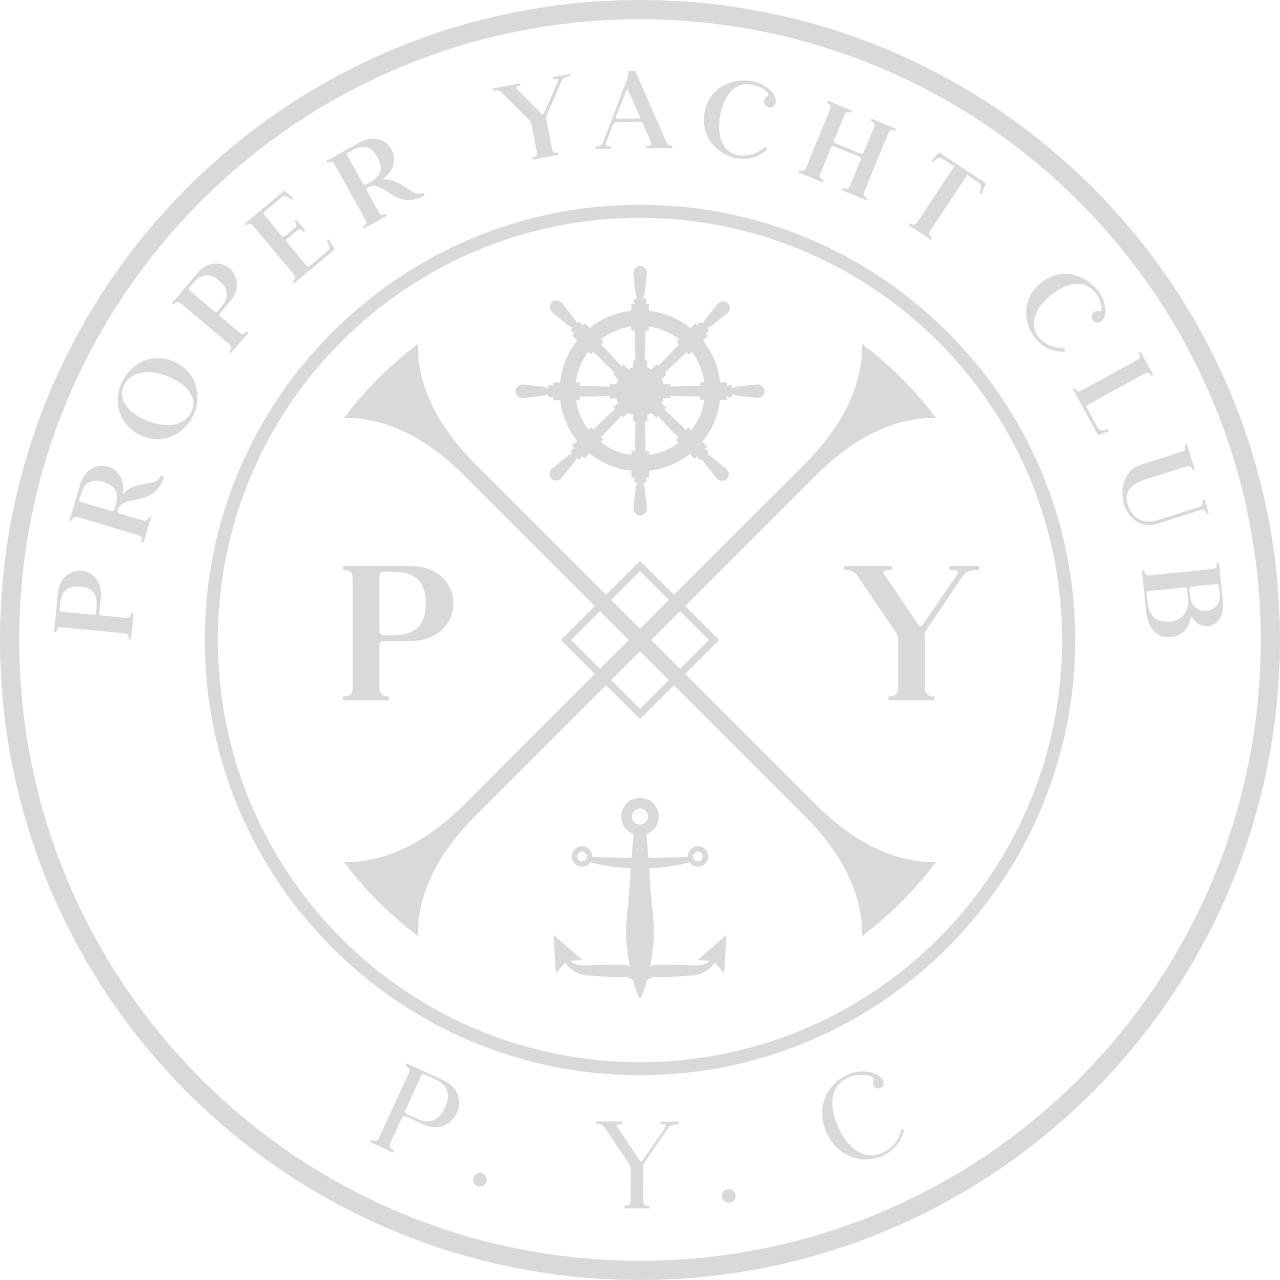 PROPER YACHT CLUB's logo